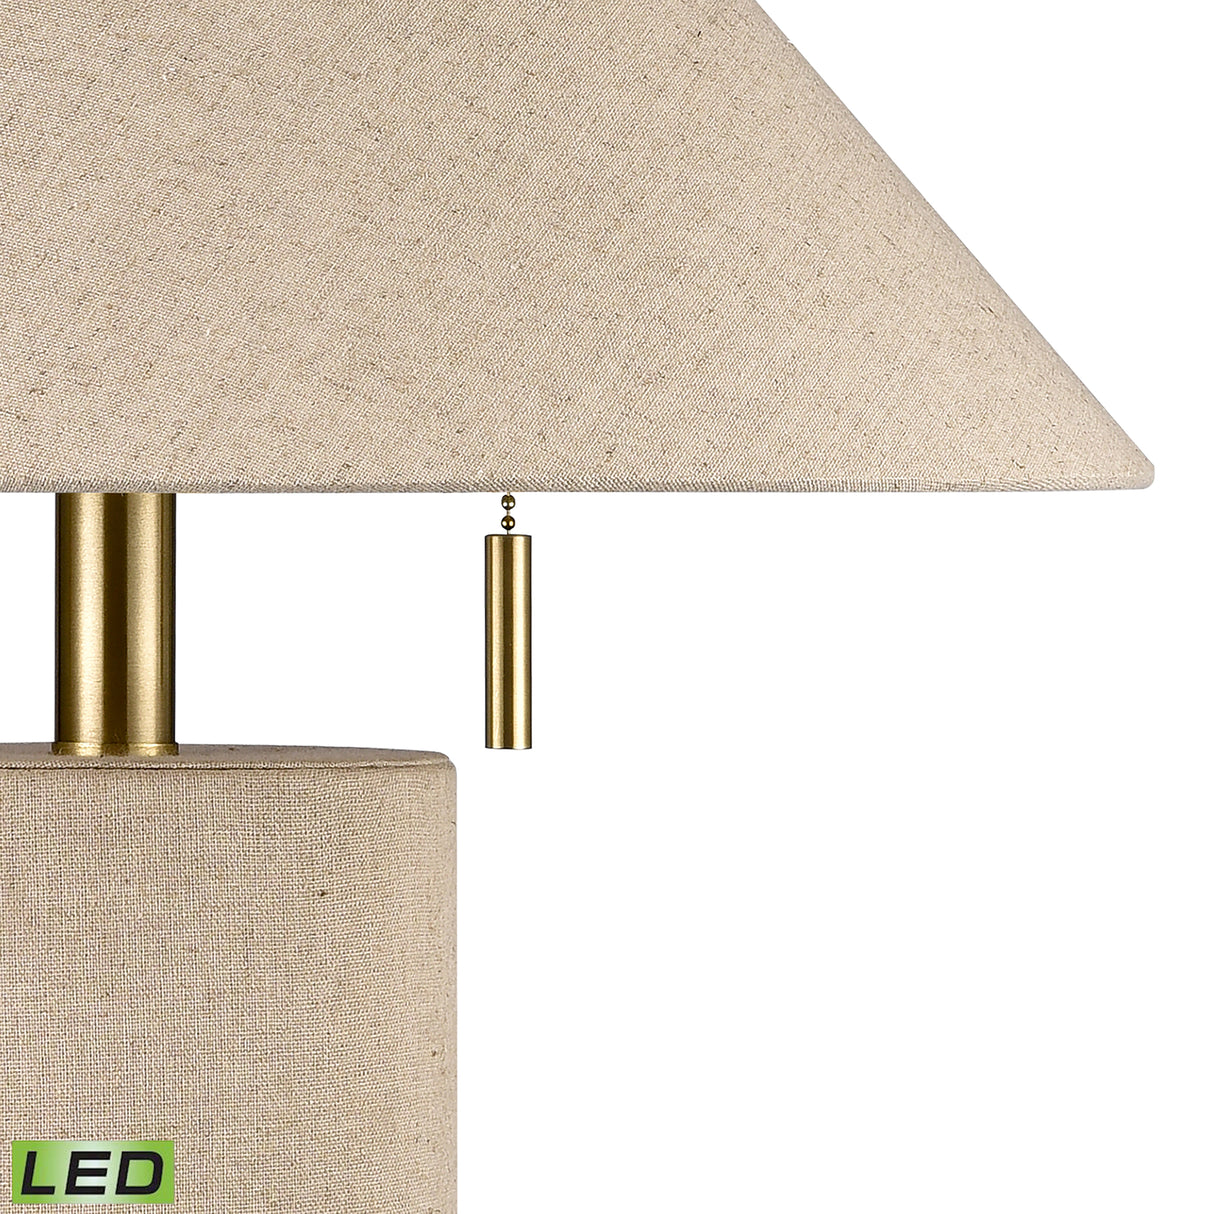 Elk H0019-10338-LED Blythe 26'' High 2-Light Table Lamp - Linen - Includes LED Bulbs